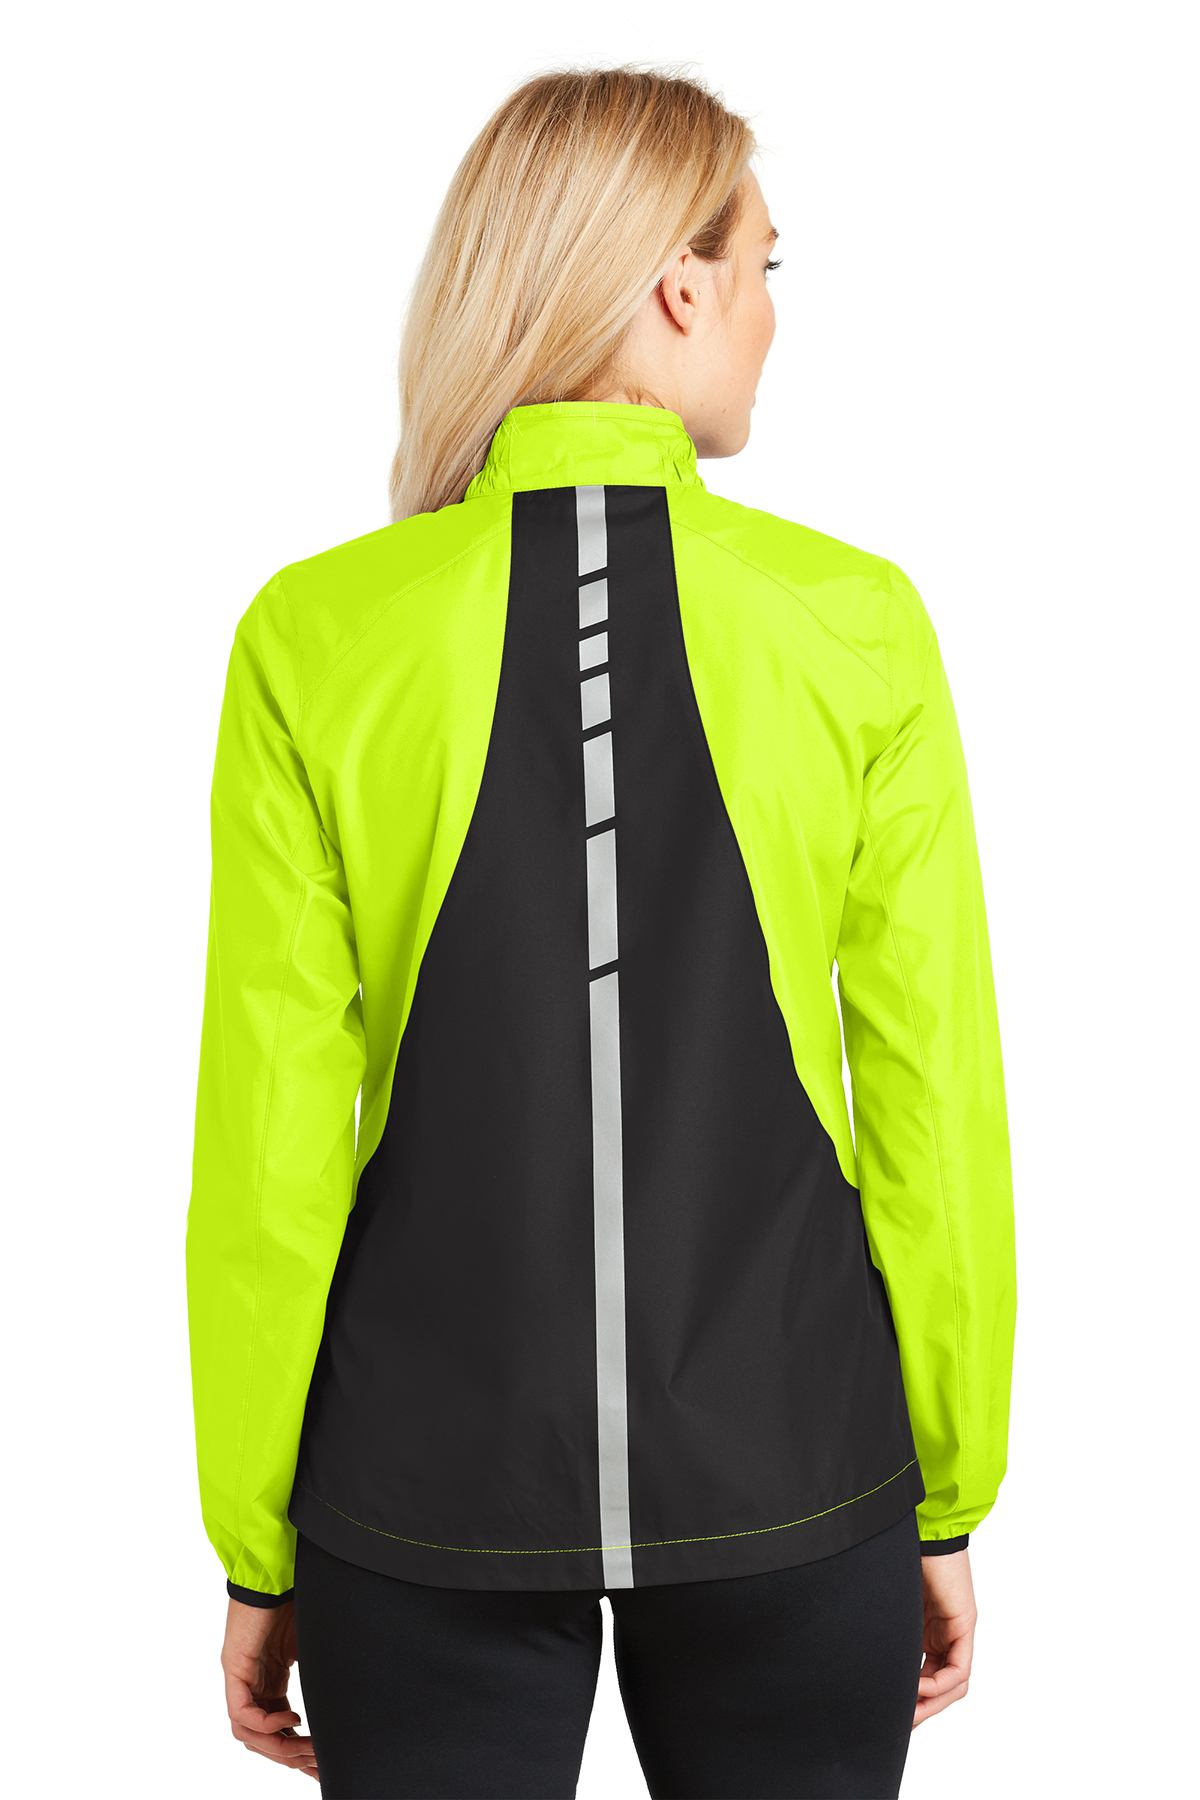 Port Authority Ladies Zephyr Reflective Hit Full-Zip Jacket | Product 